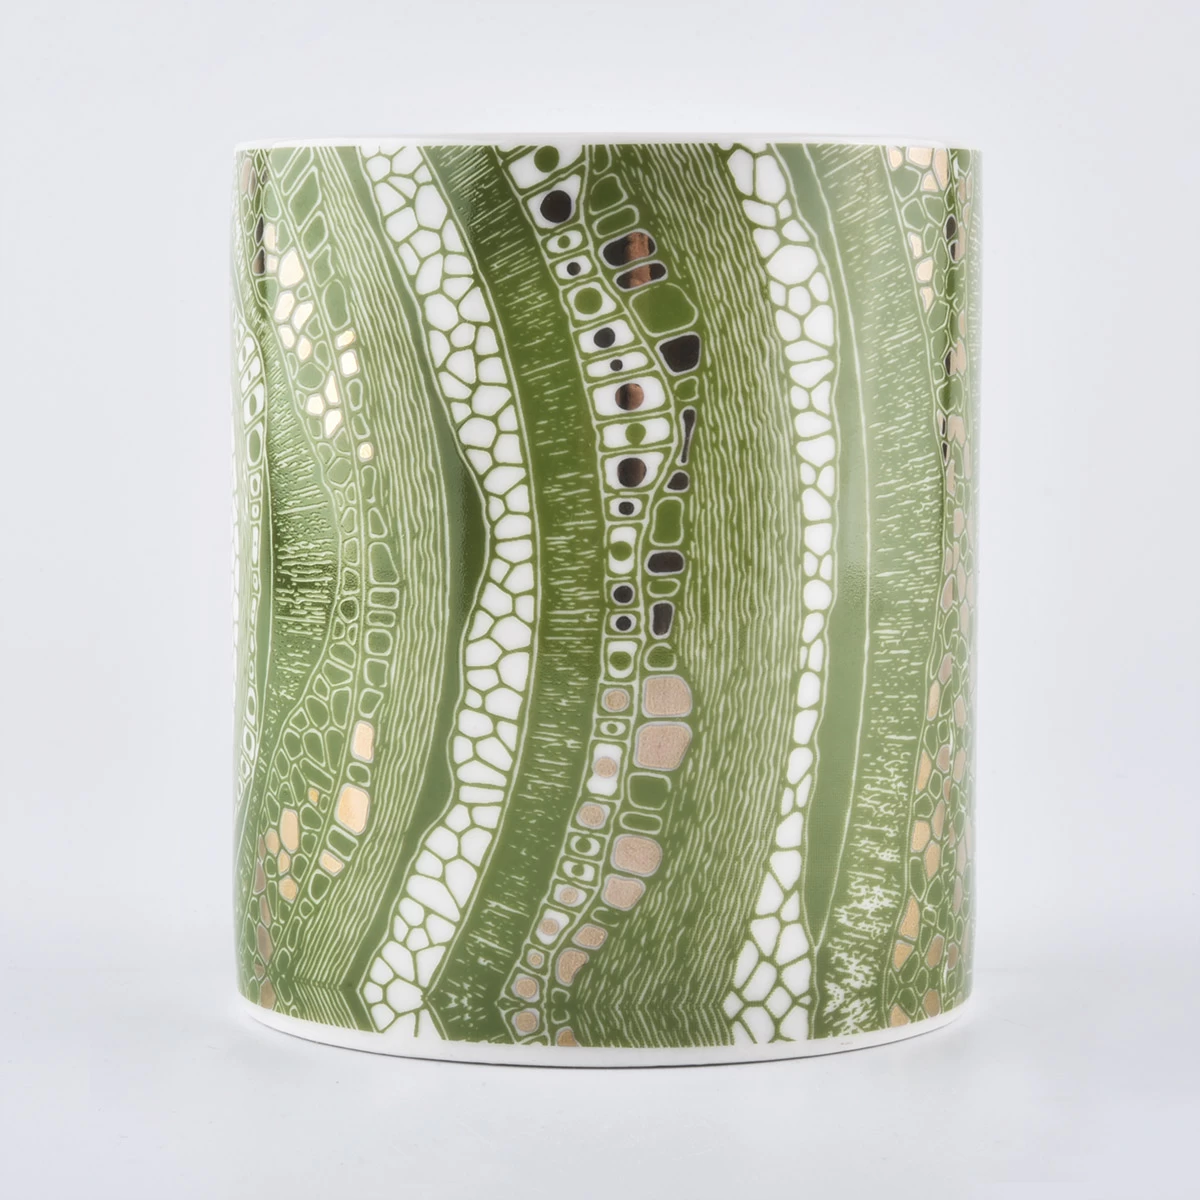 Stylish Ceramic Candle Jar For Candle Making